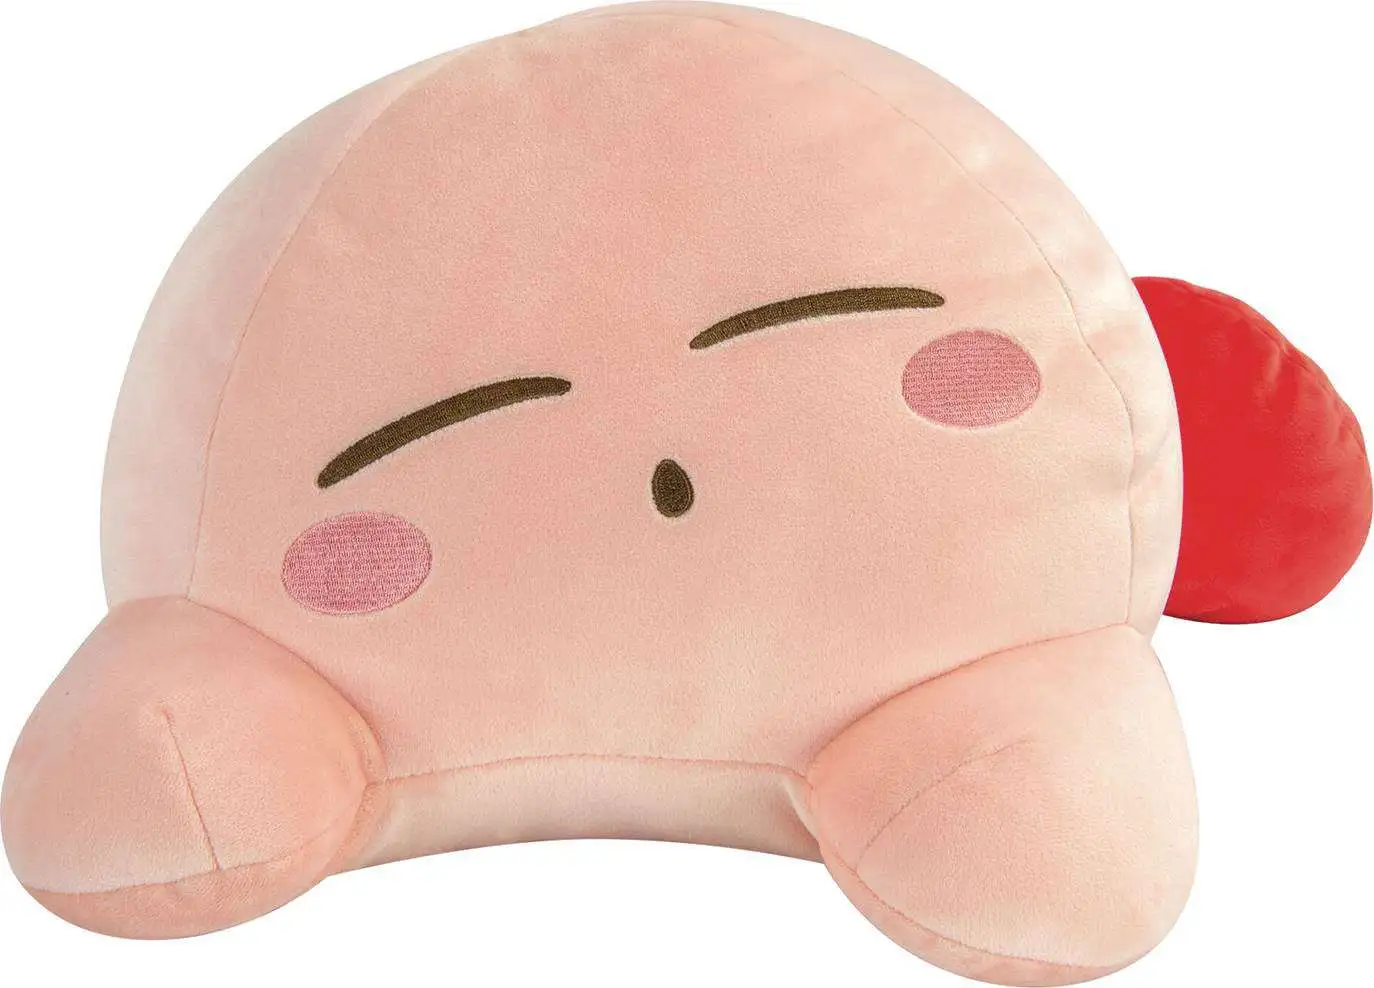 Kirbys Adventure Super Star Kirby 9 Plush 9 San-Ei - ToyWiz